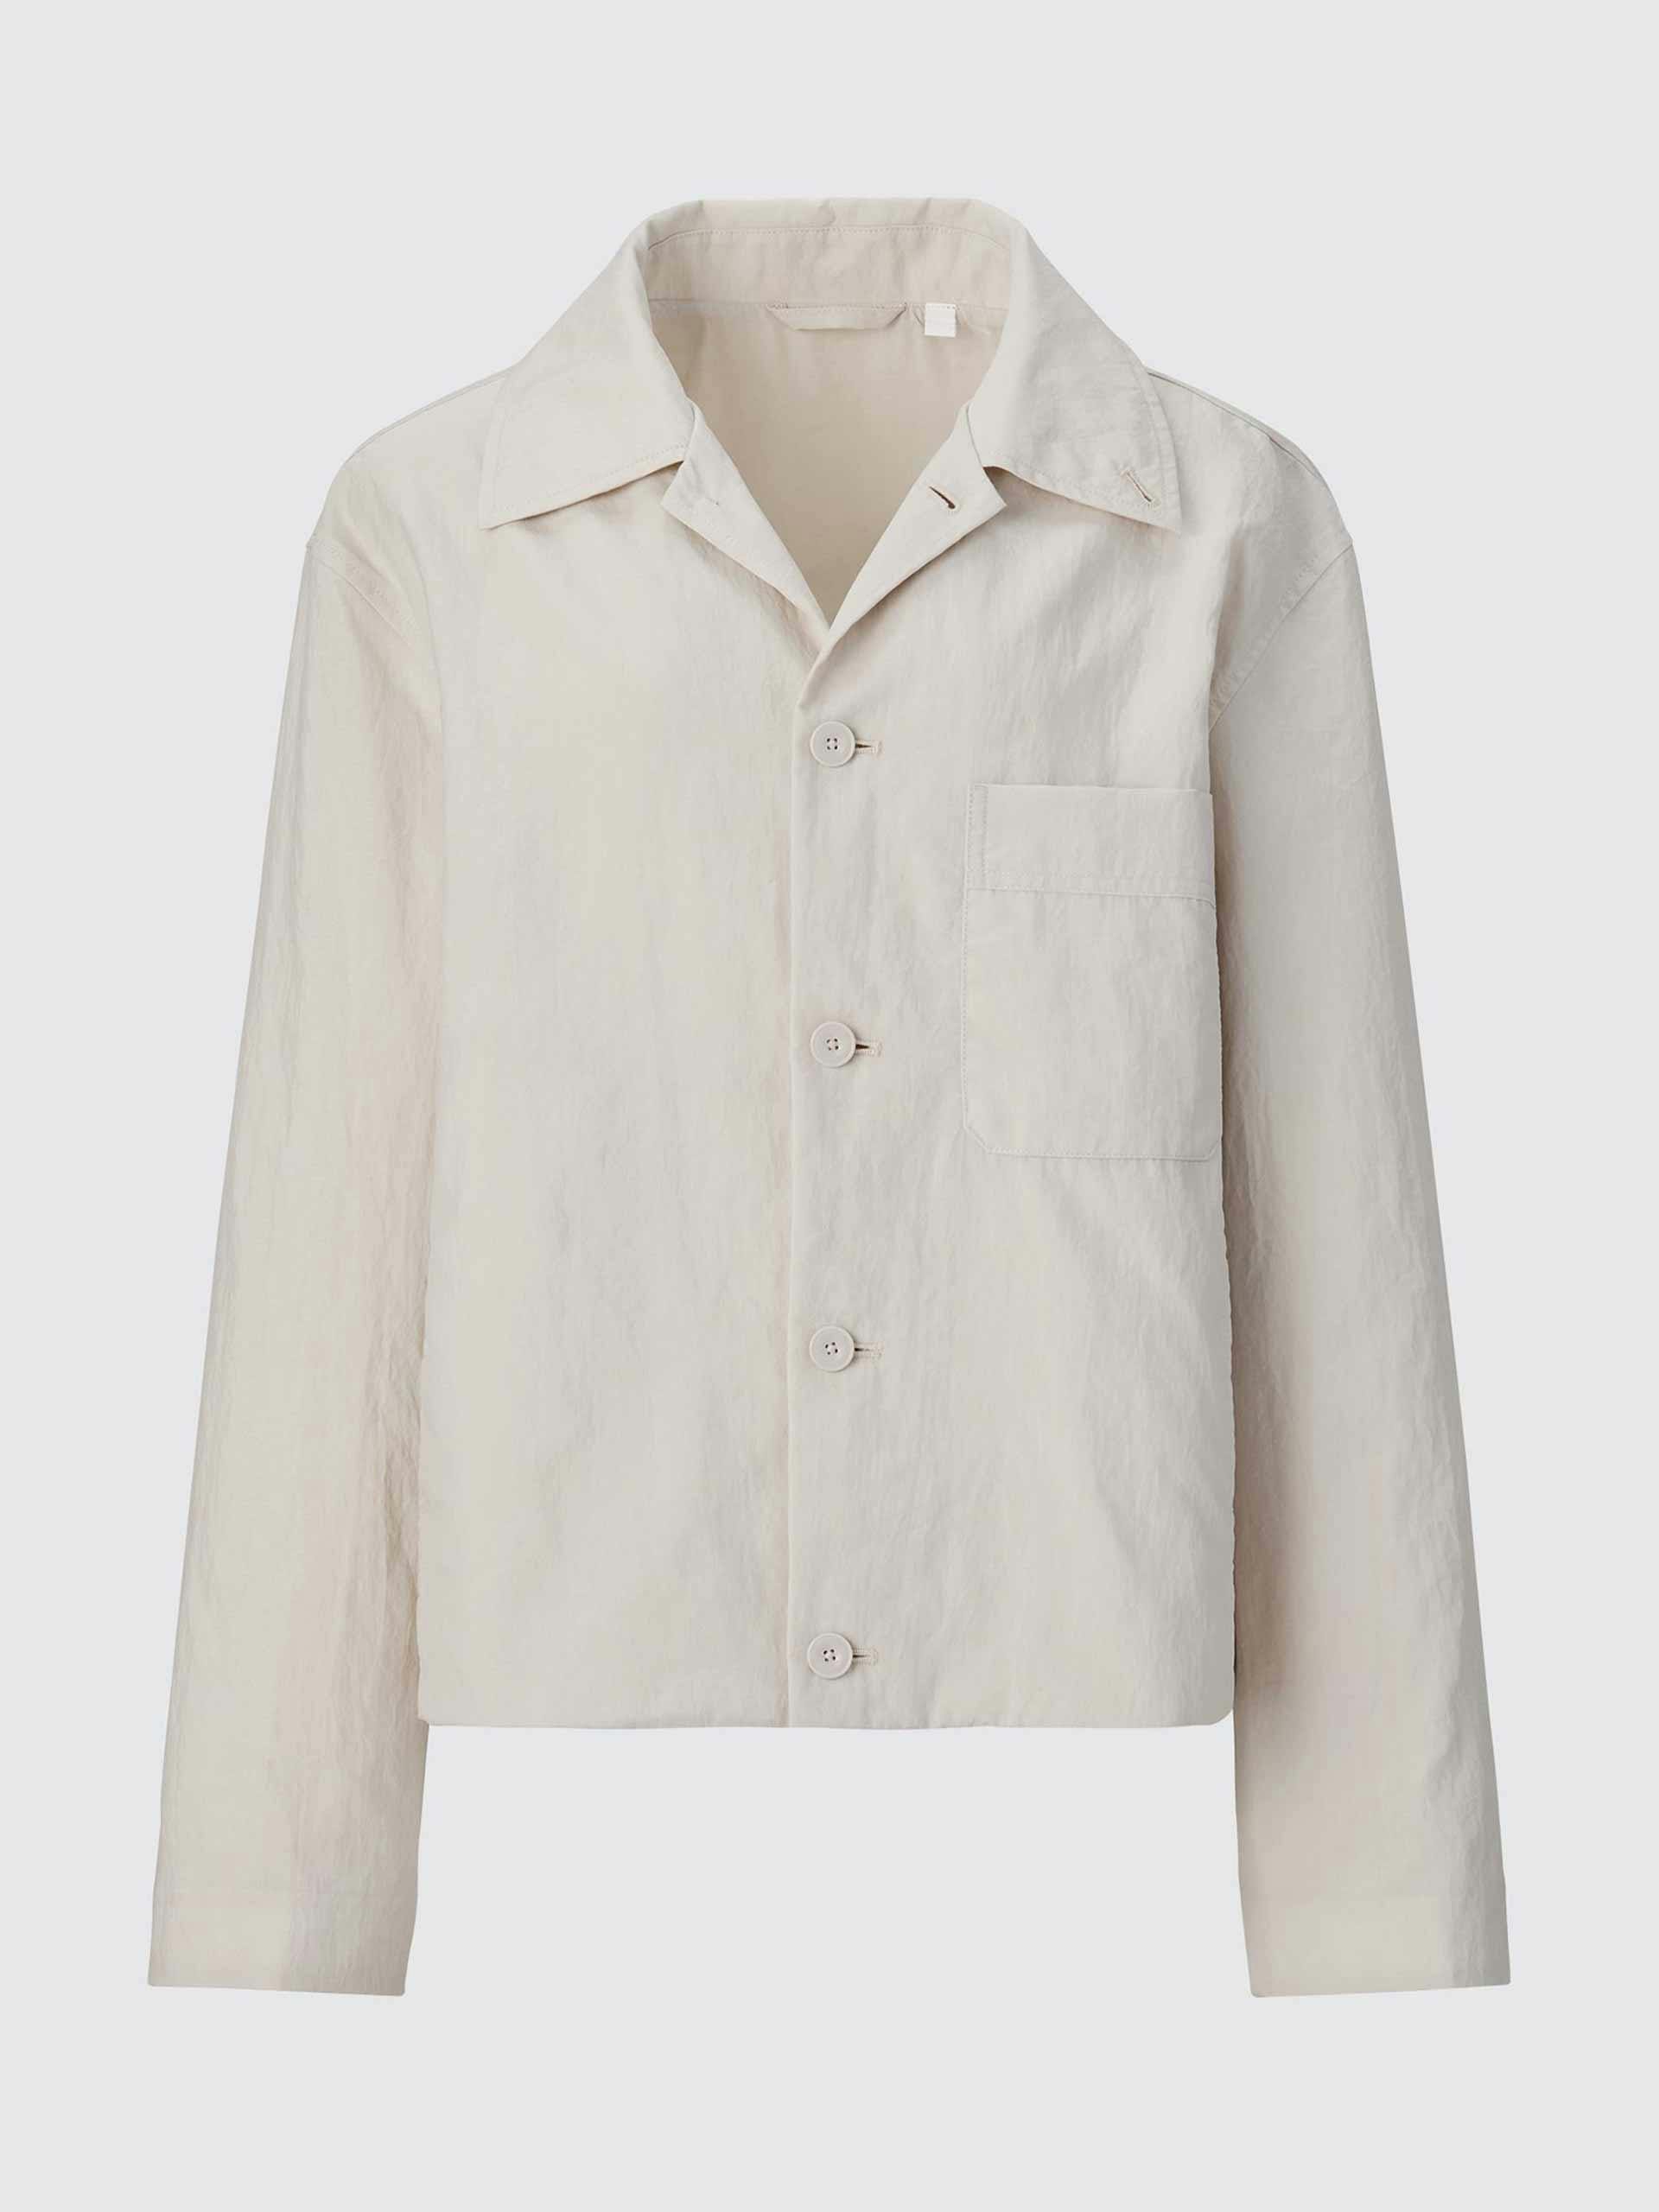 Nylon off-white shirt jacket